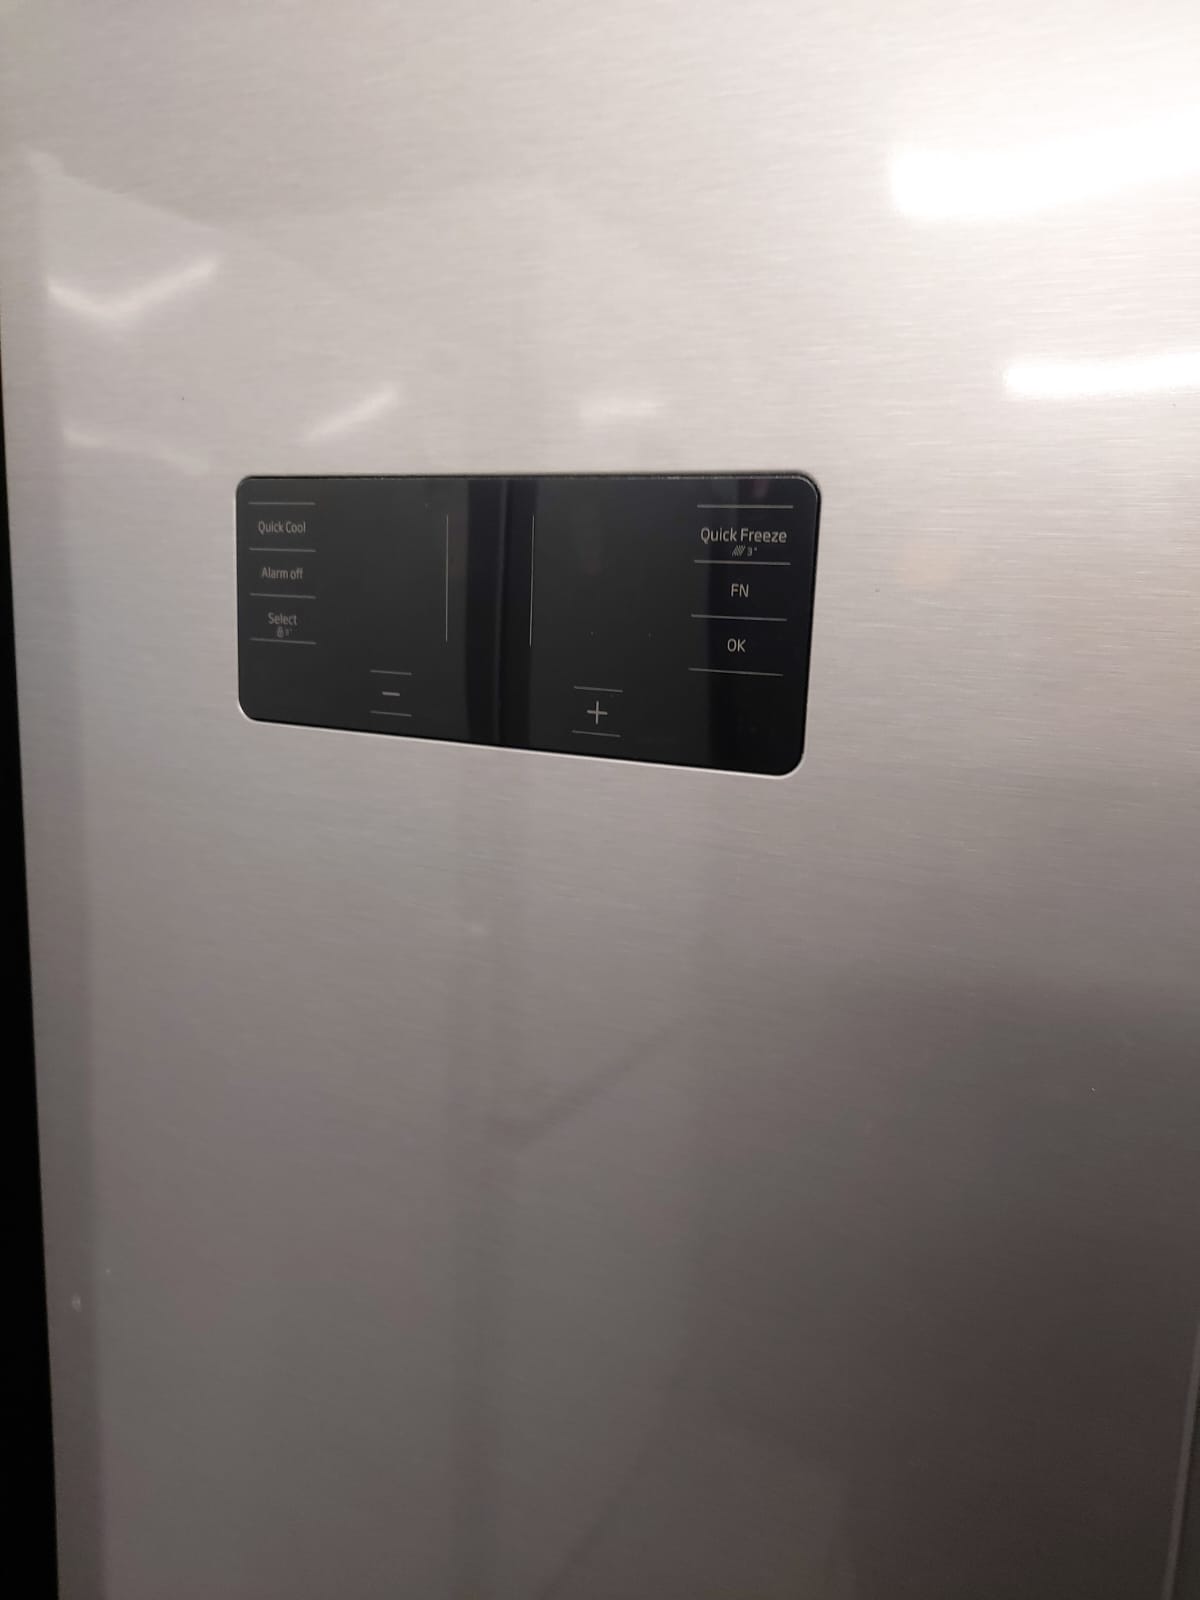 Beko MN1436224DPS/T American  Fridge Freezer with Water Dispenser - Frost Free - Grey